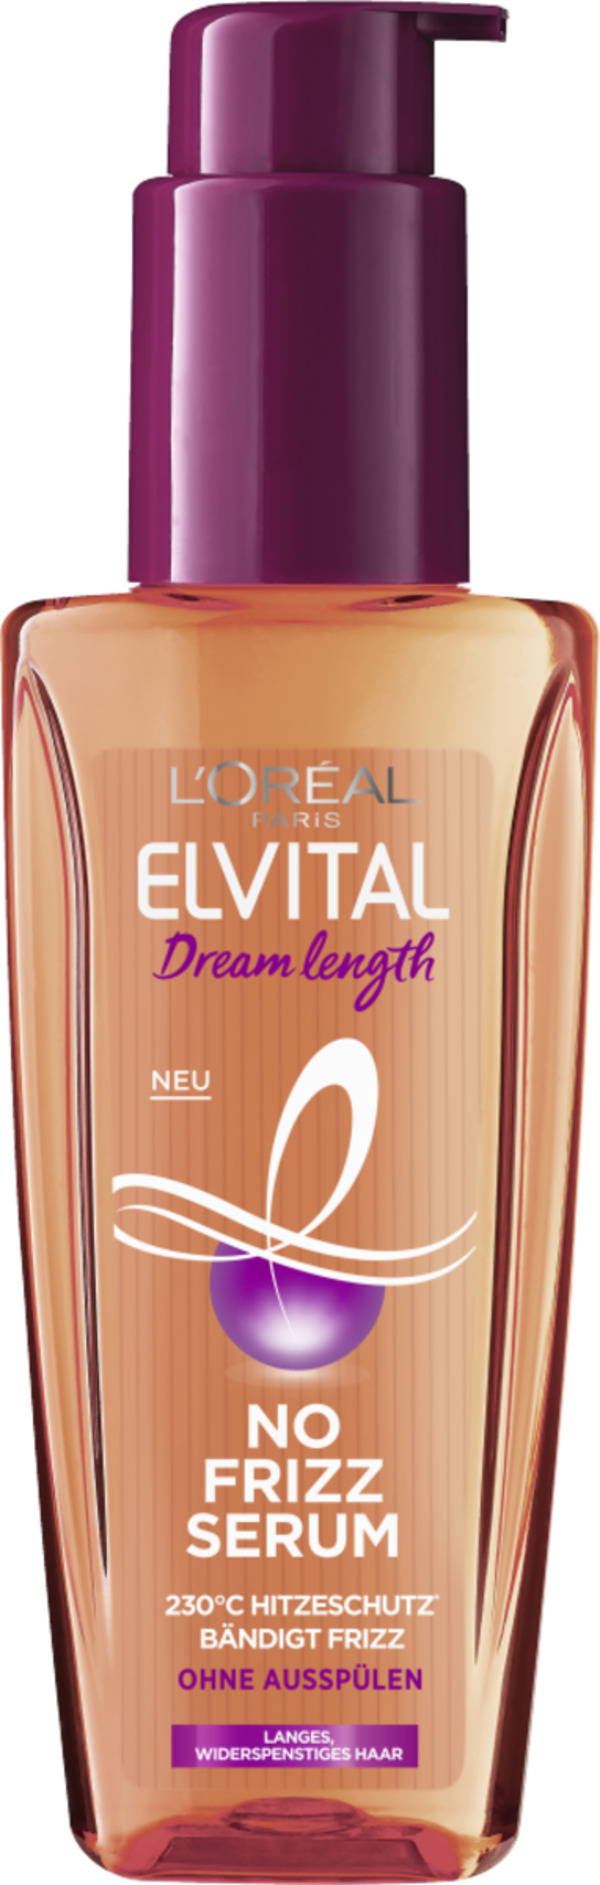 Bild 1 von L’Oréal Paris Elvital Dream Length No Frizz Serum